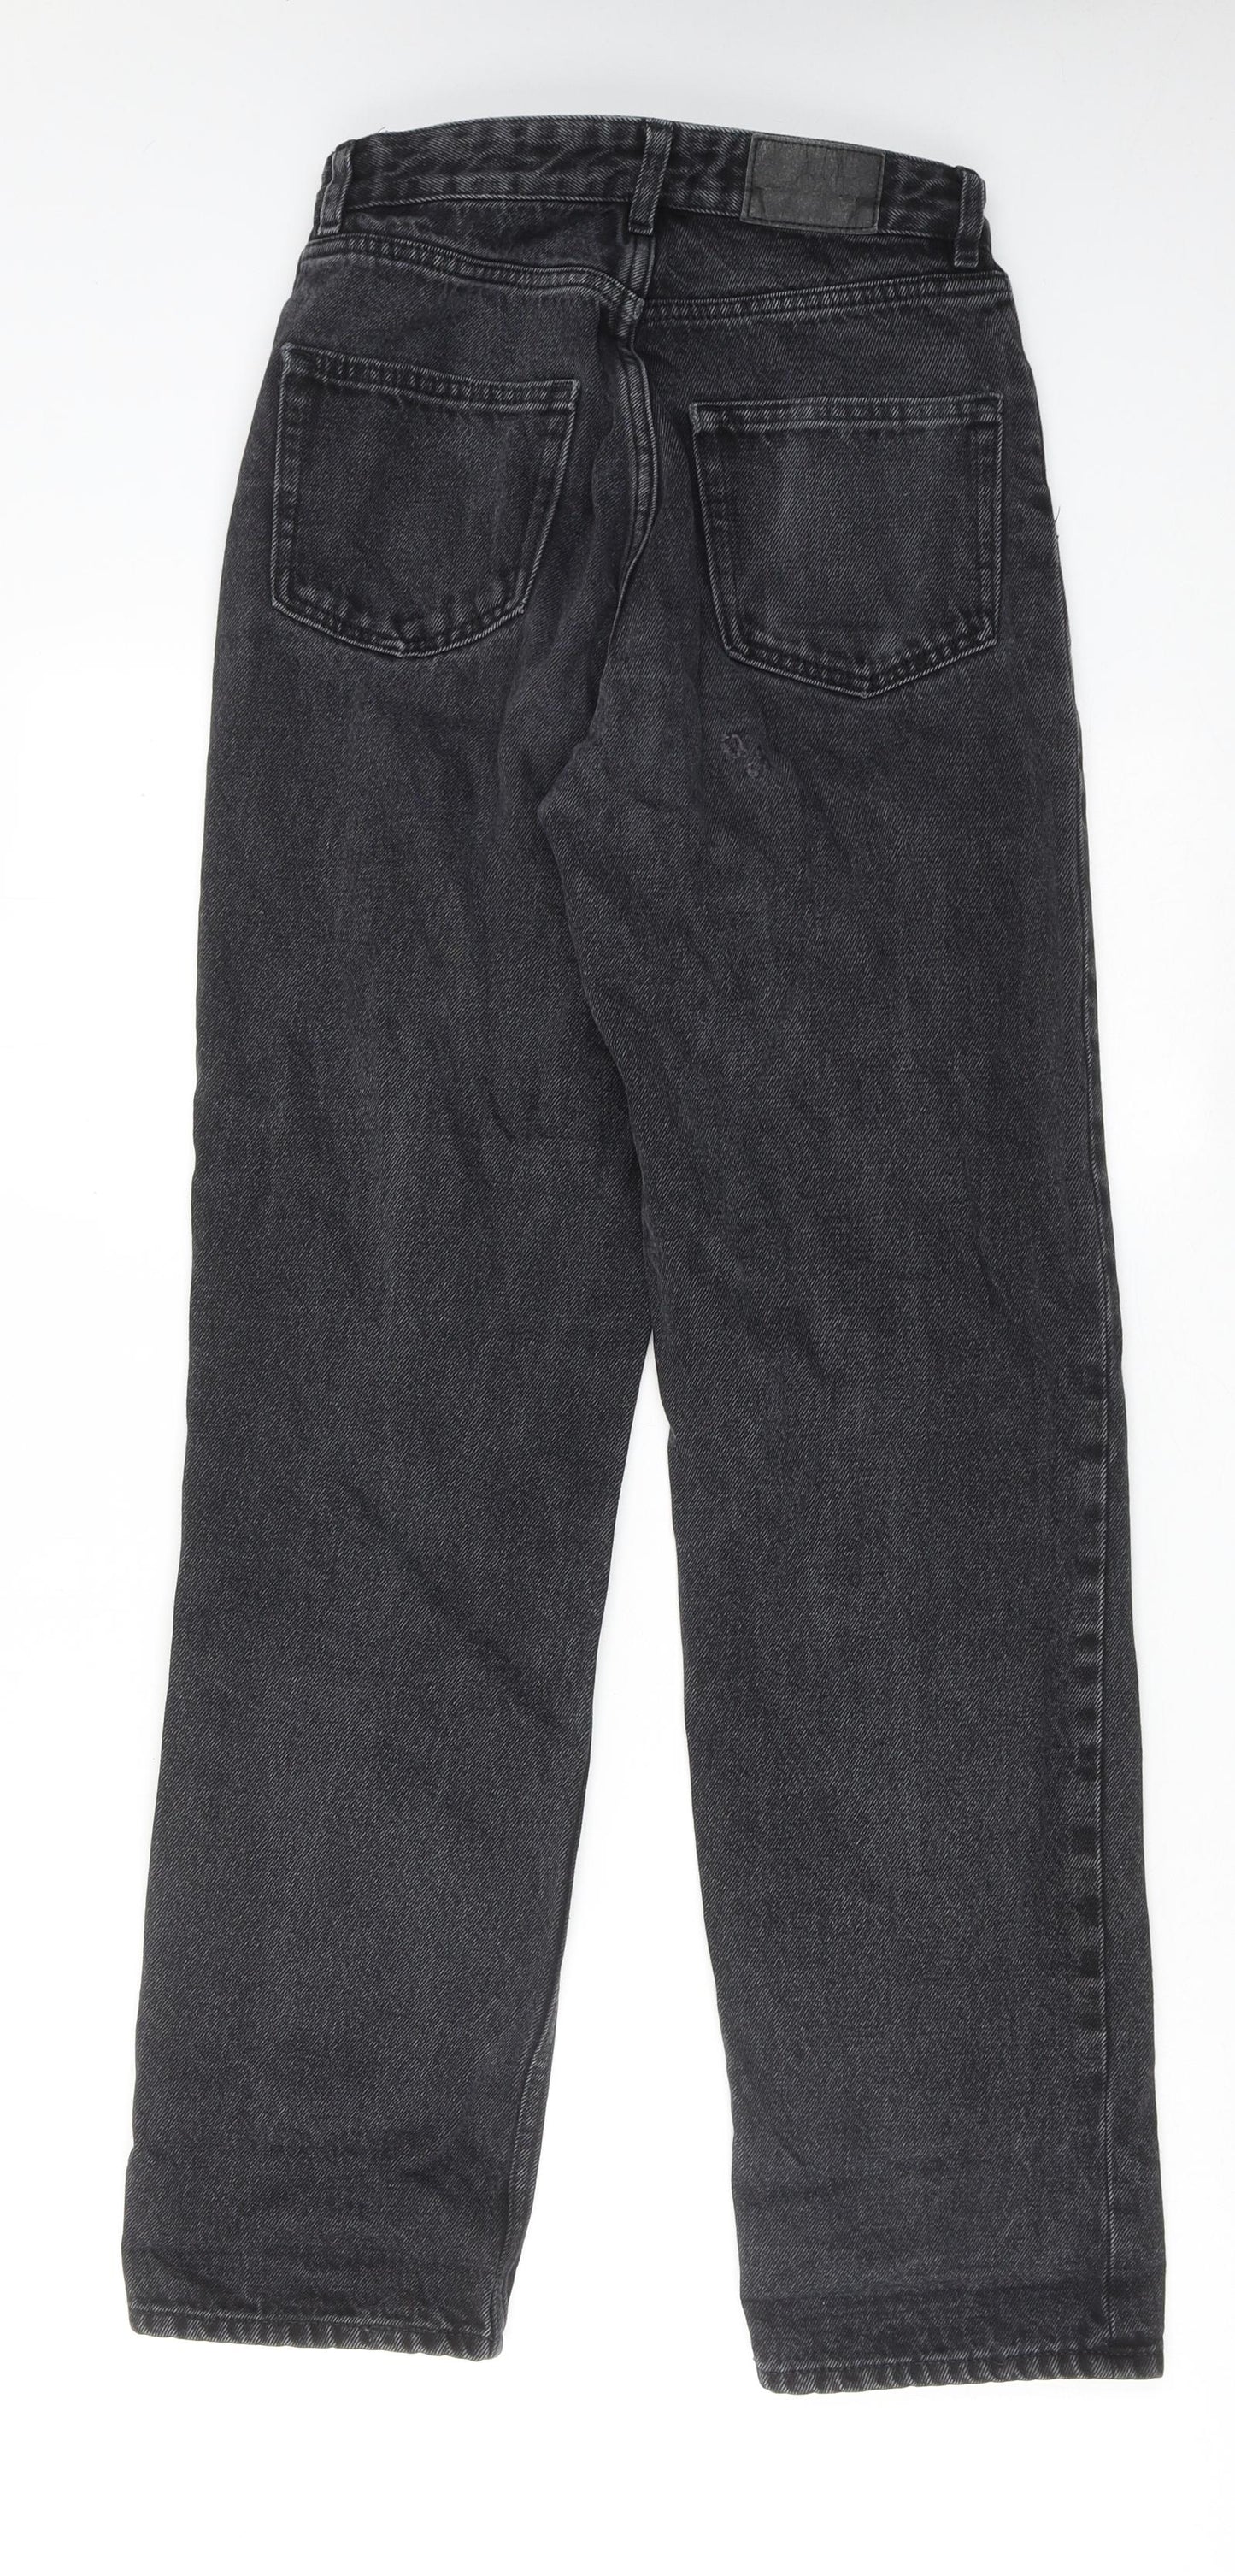 Monki Womens Grey Cotton Straight Jeans Size 26 in Regular Zip